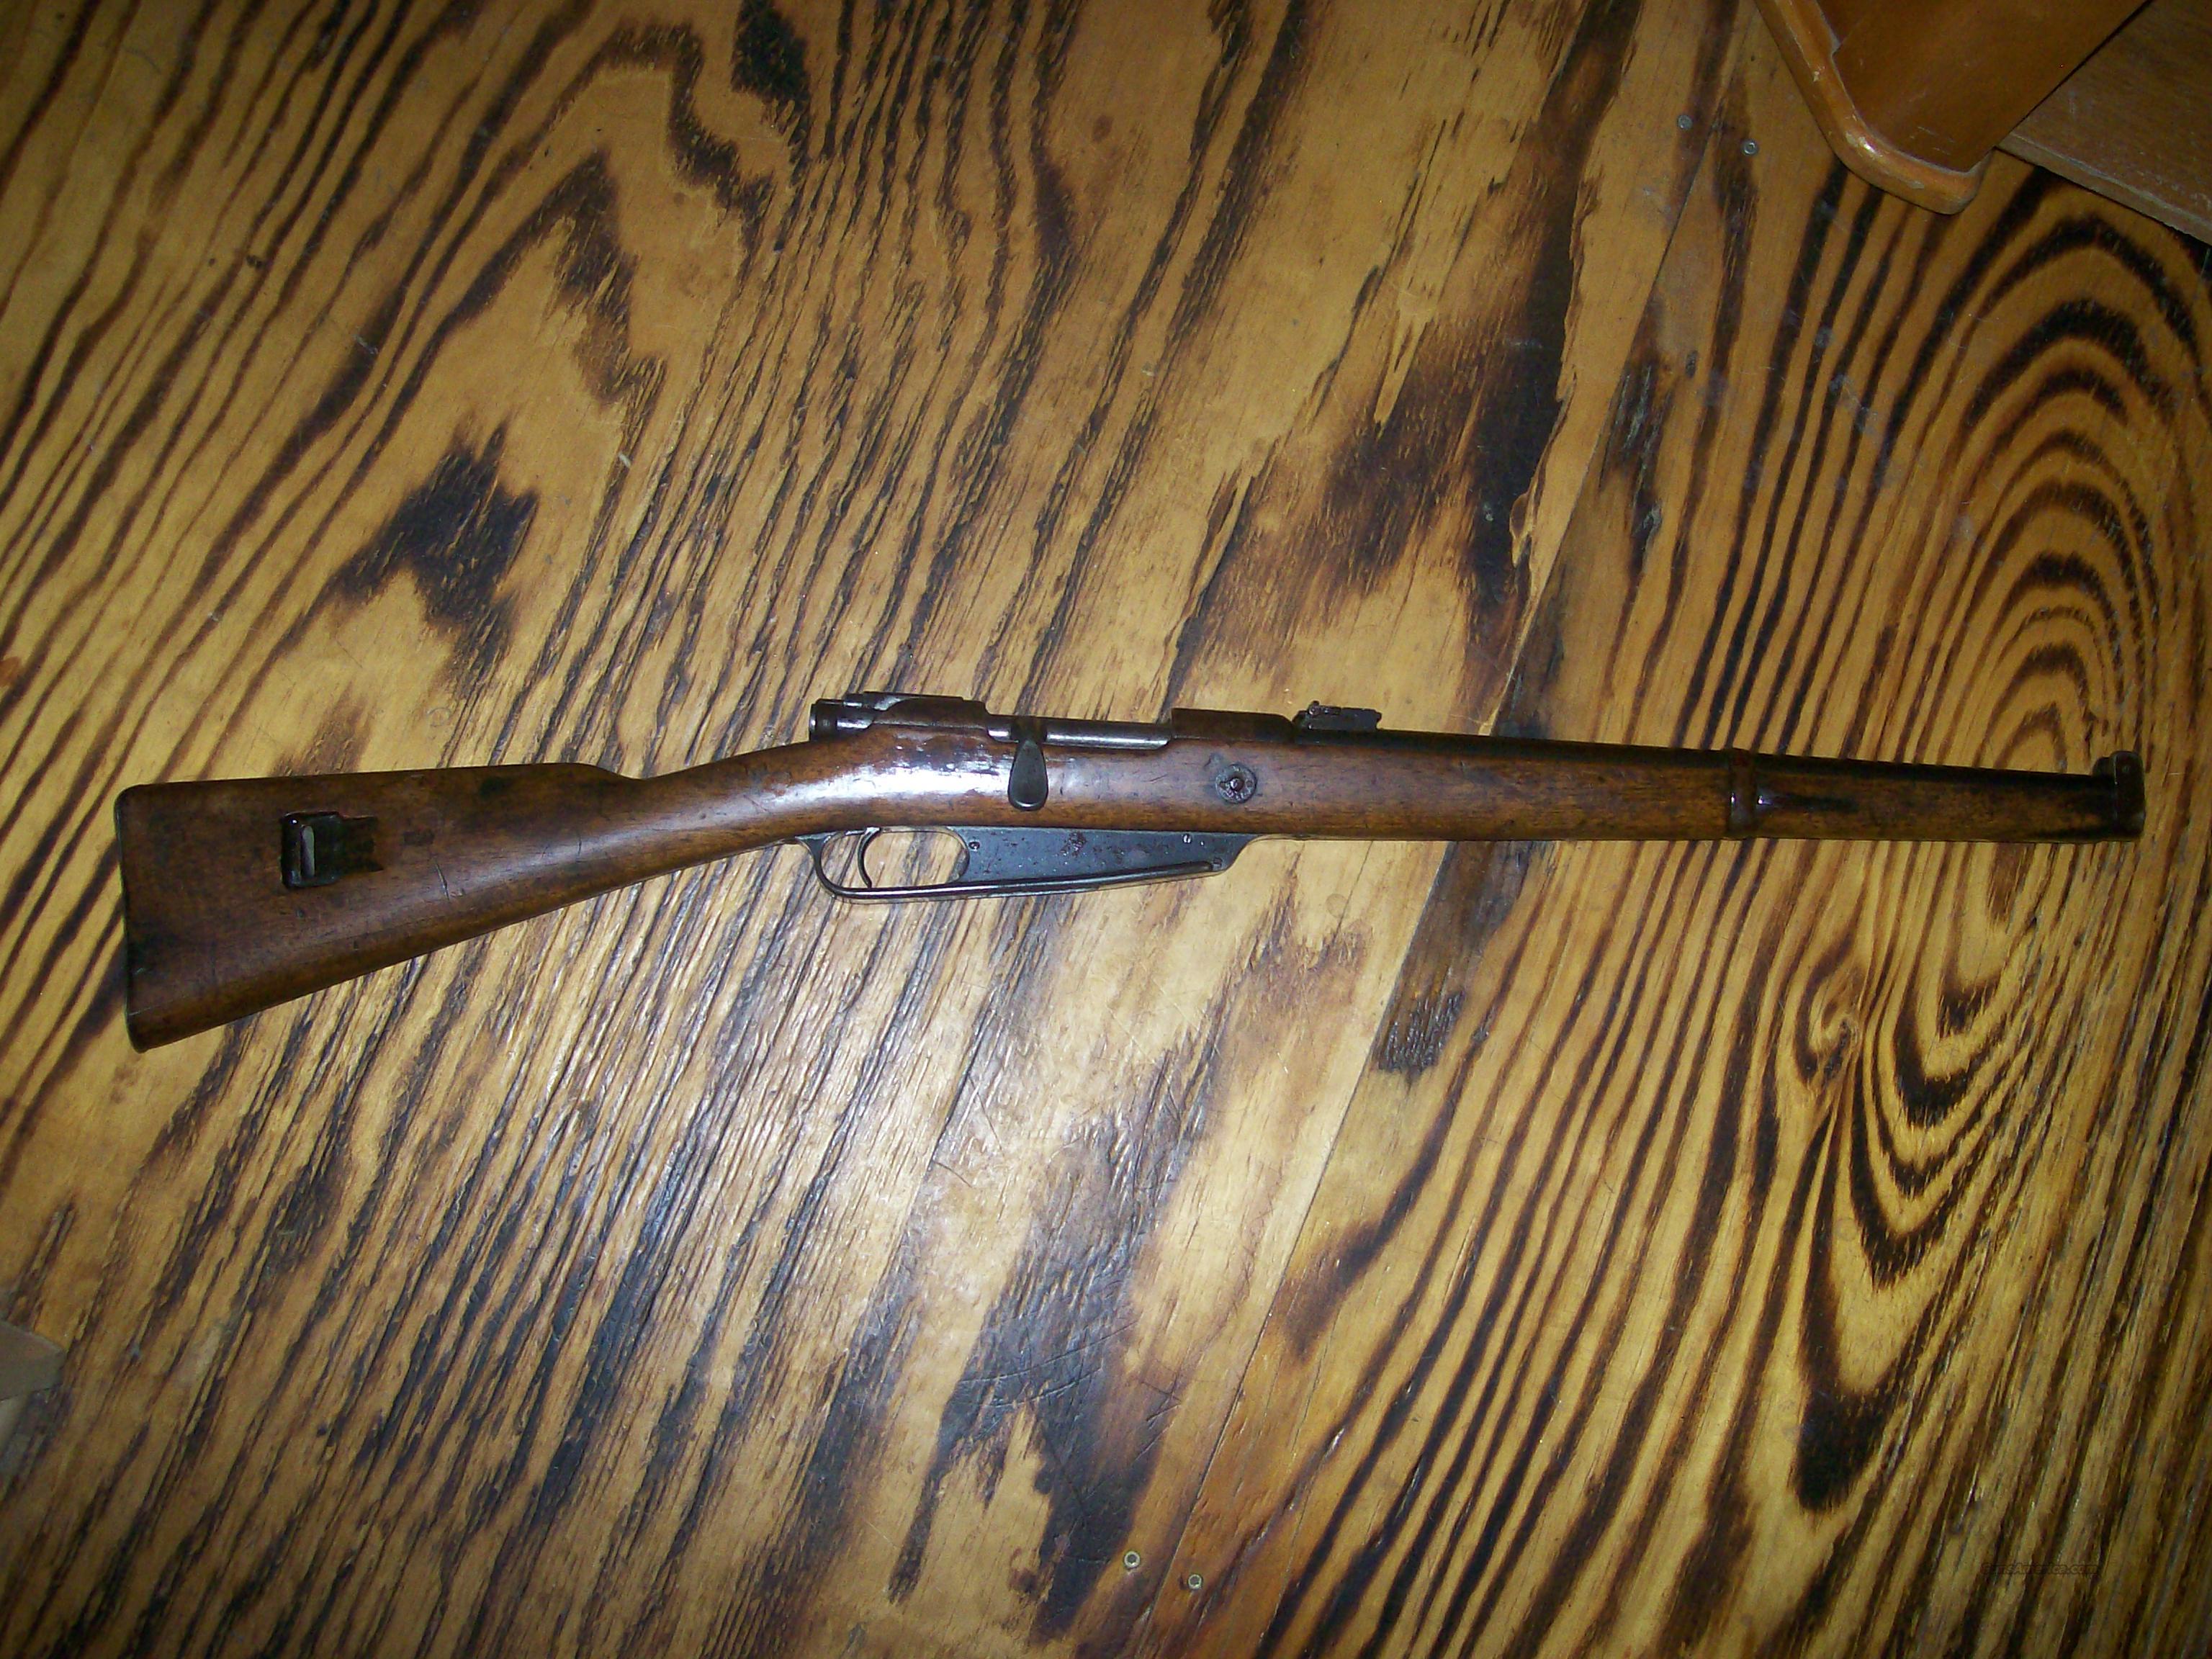 1888 germann imperial carbine for sale at Gunsamerica.com: 908829657